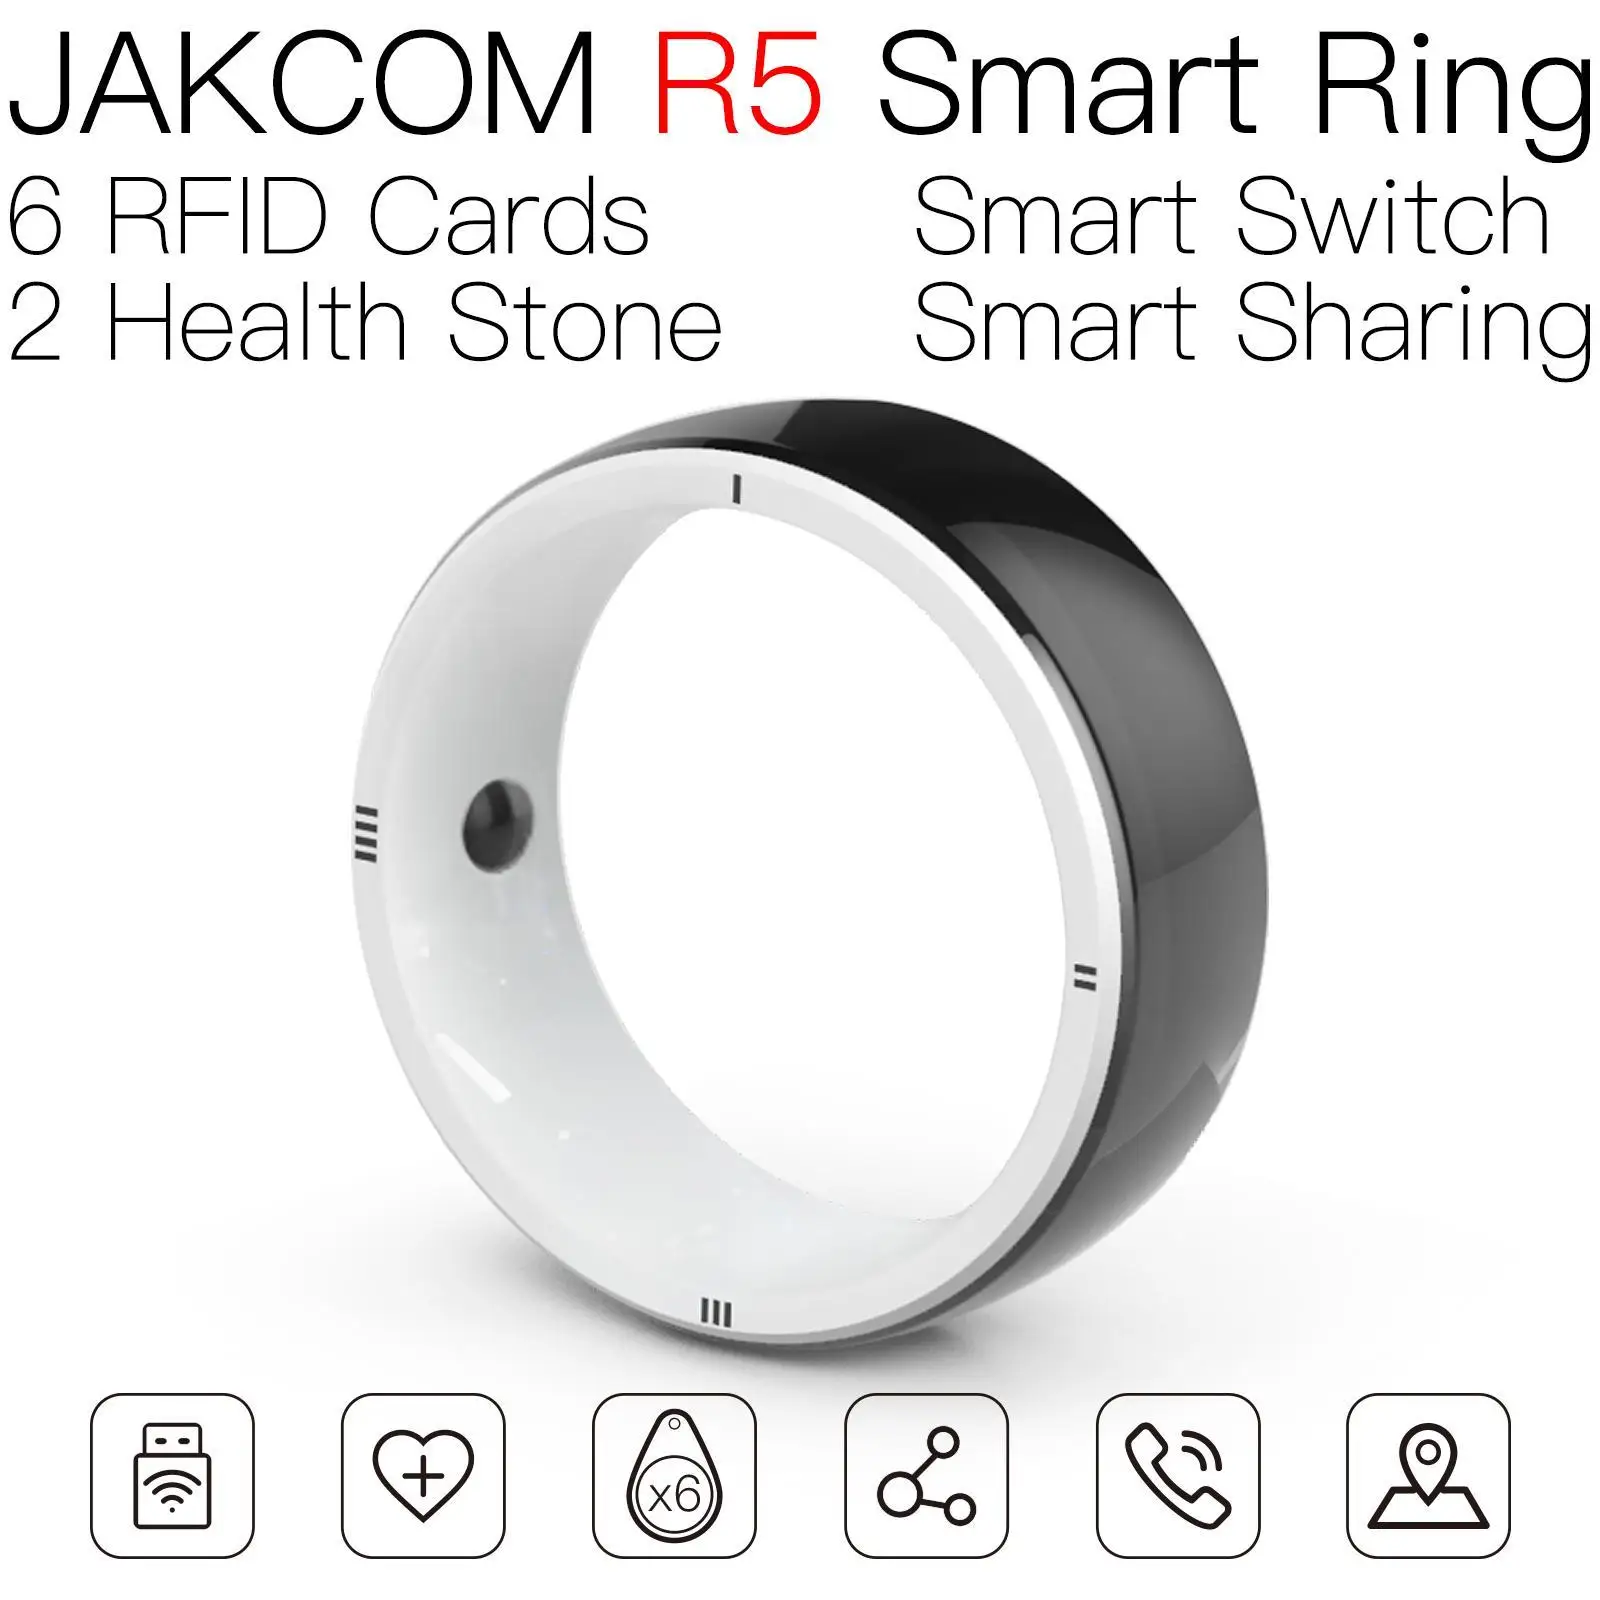 

JAKCOM R5 Smart Ring Super value than nfc chip flat rifd card 125khz em4100 tk4100 interruptor rfid bipolar hall effect sensor